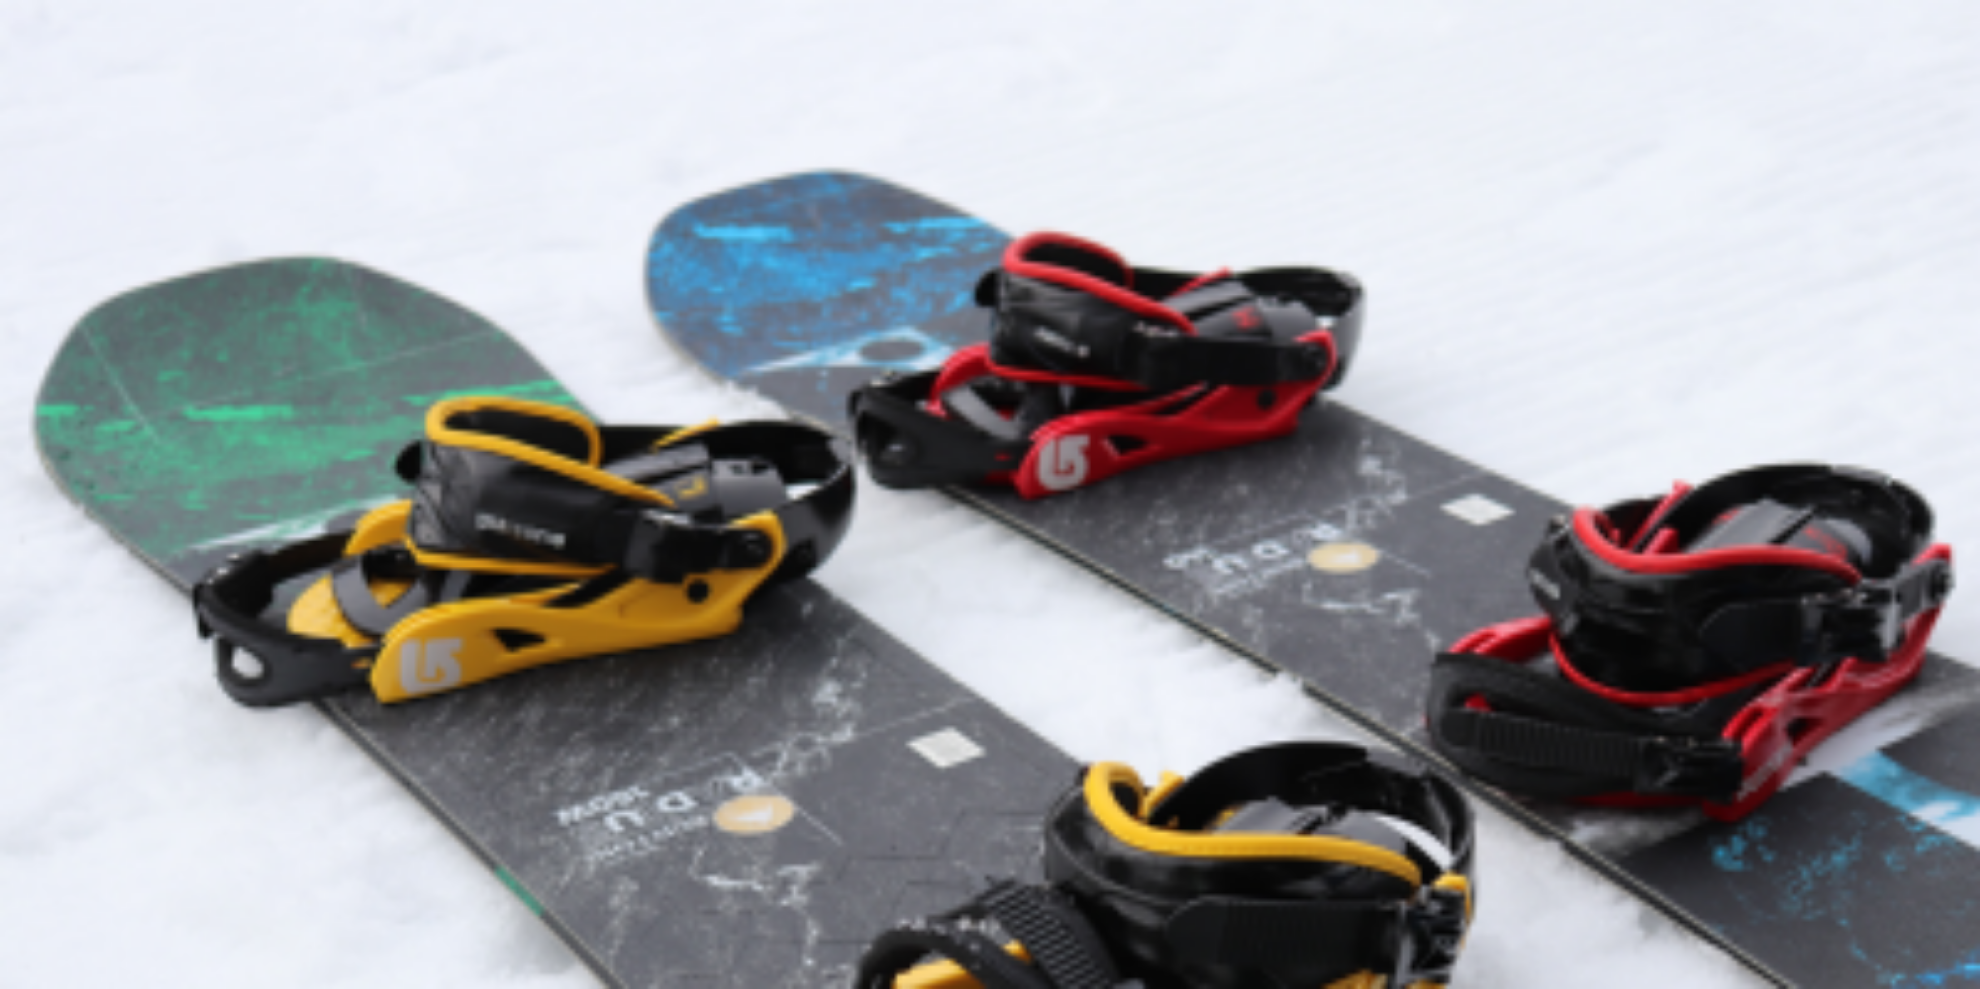 Snowboard Rentals